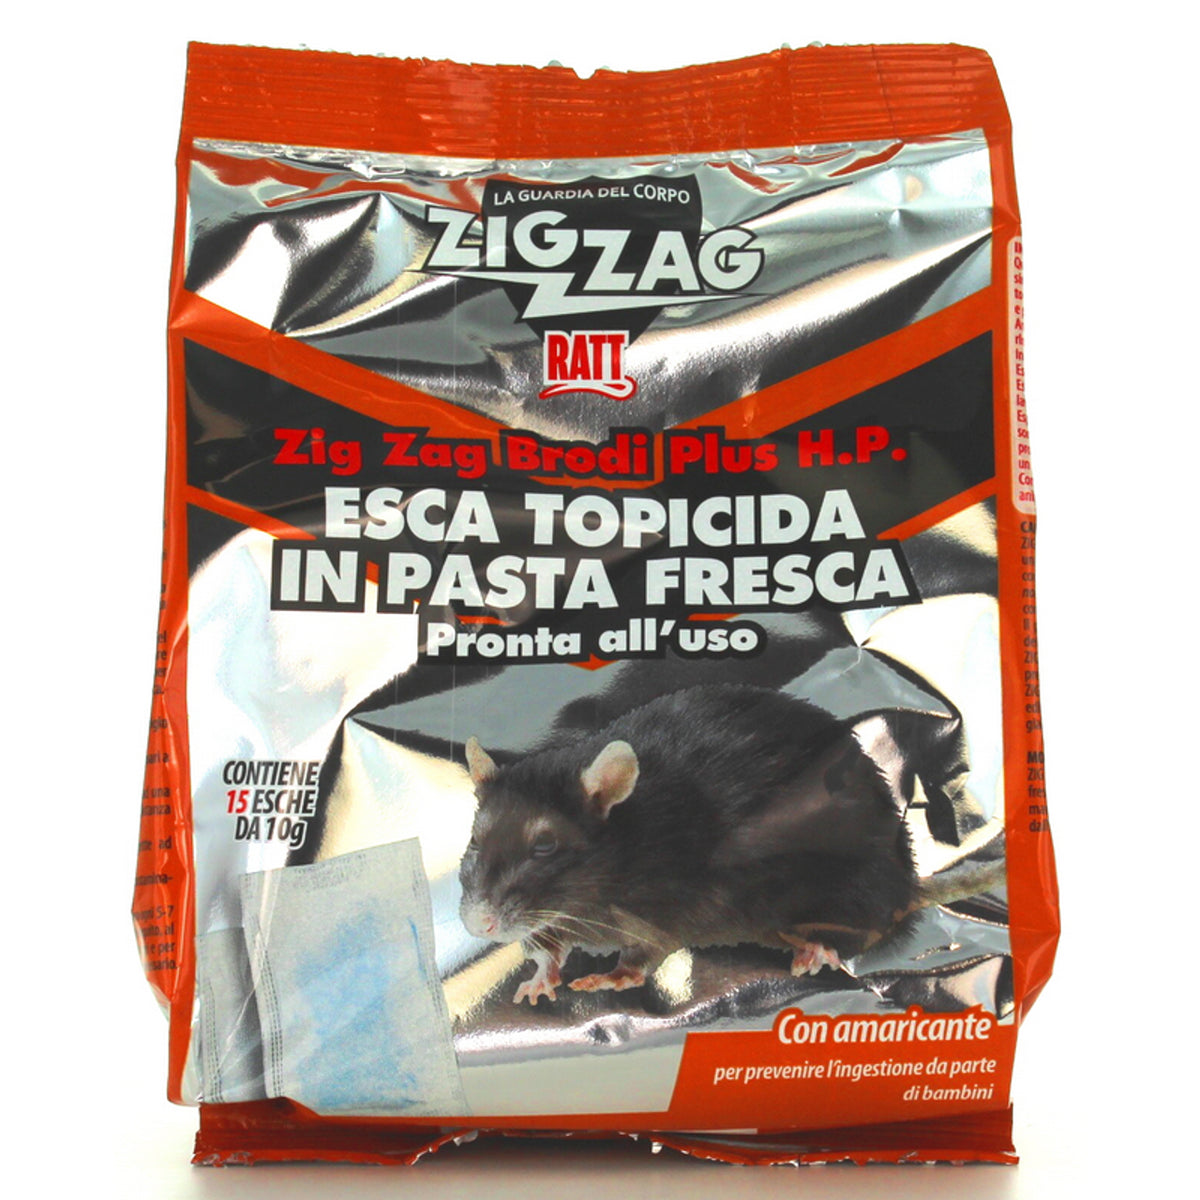 Zig Zag Ratt Topicida bait in presca pasta 15 baits of 10 gr